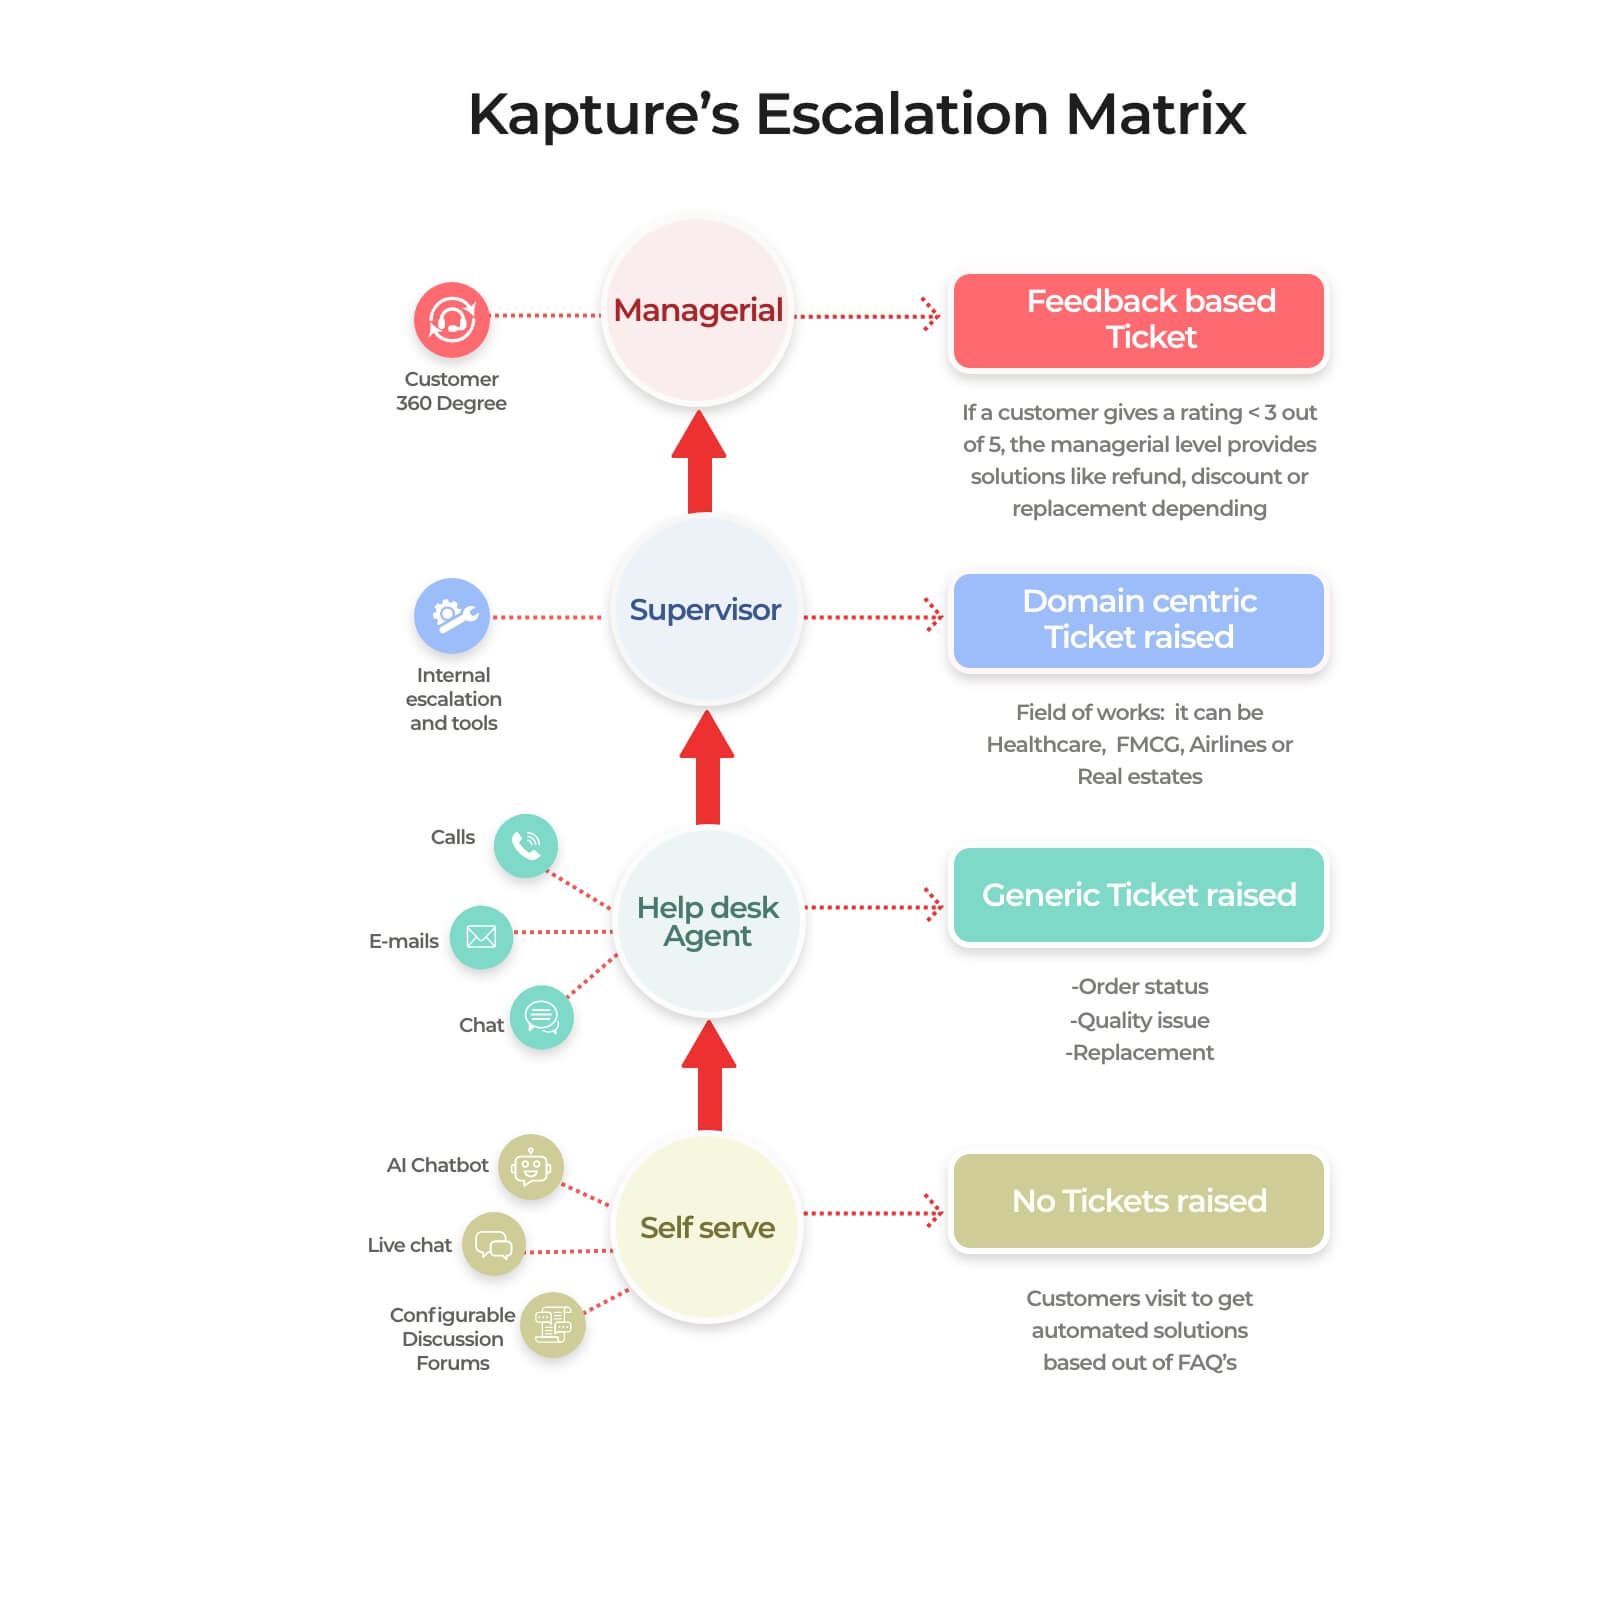 Escalation Matrix by Kapture